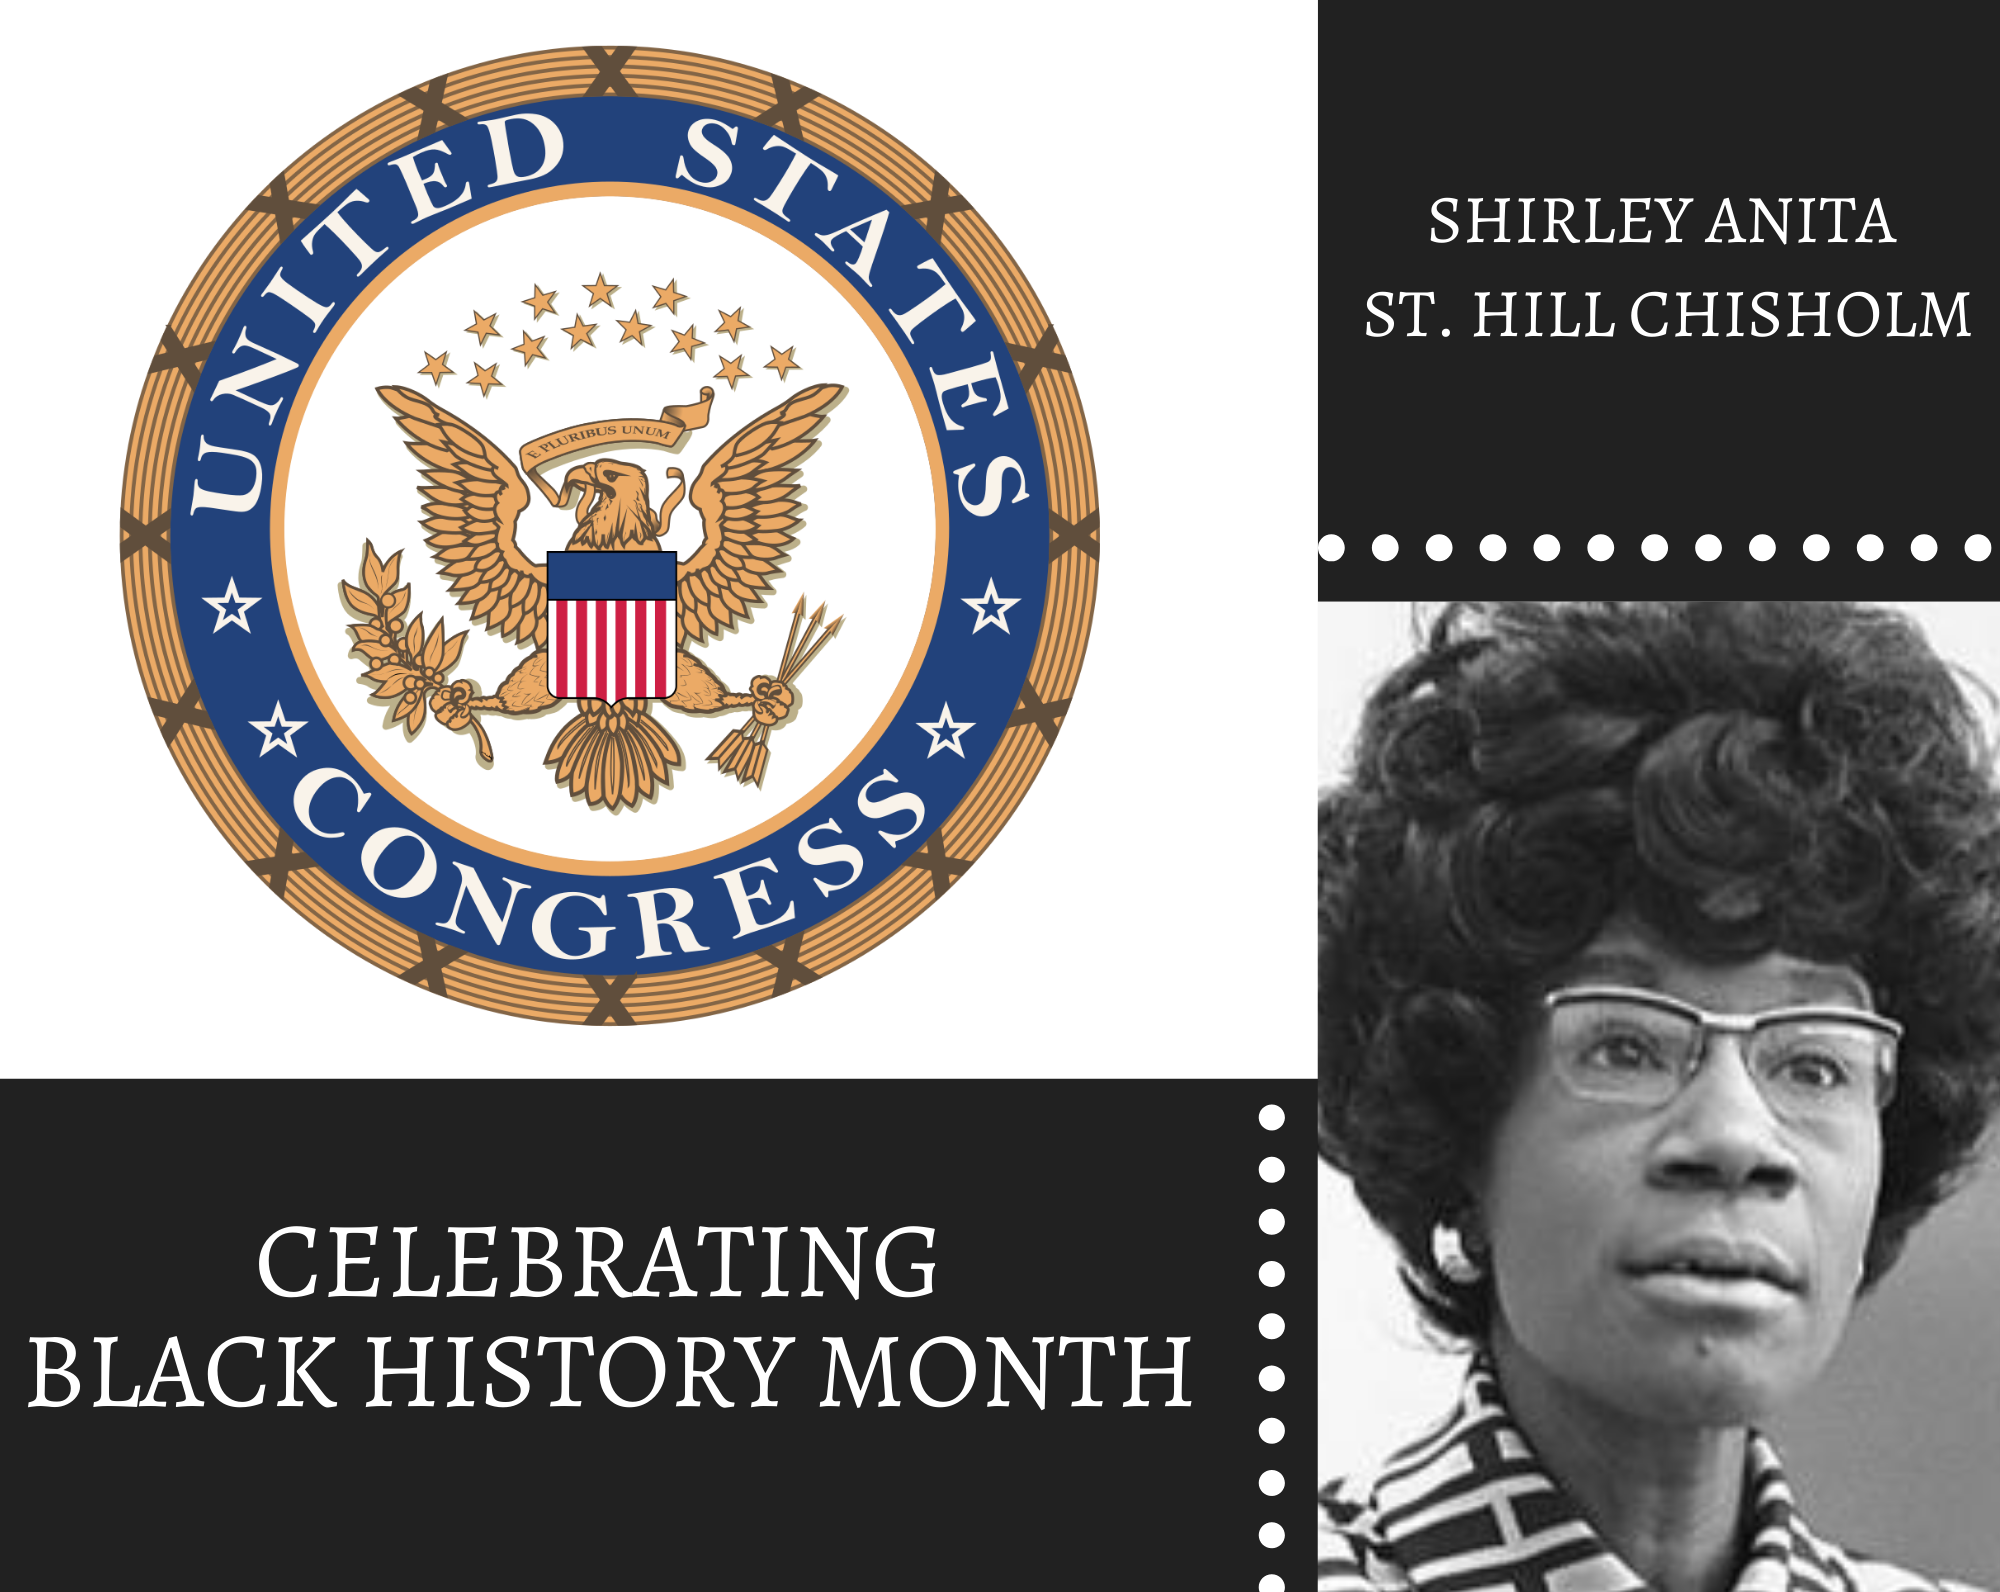 Christian Academy School System | Celebrating Black History Month | Shirley Anita St. Hill Chisholm